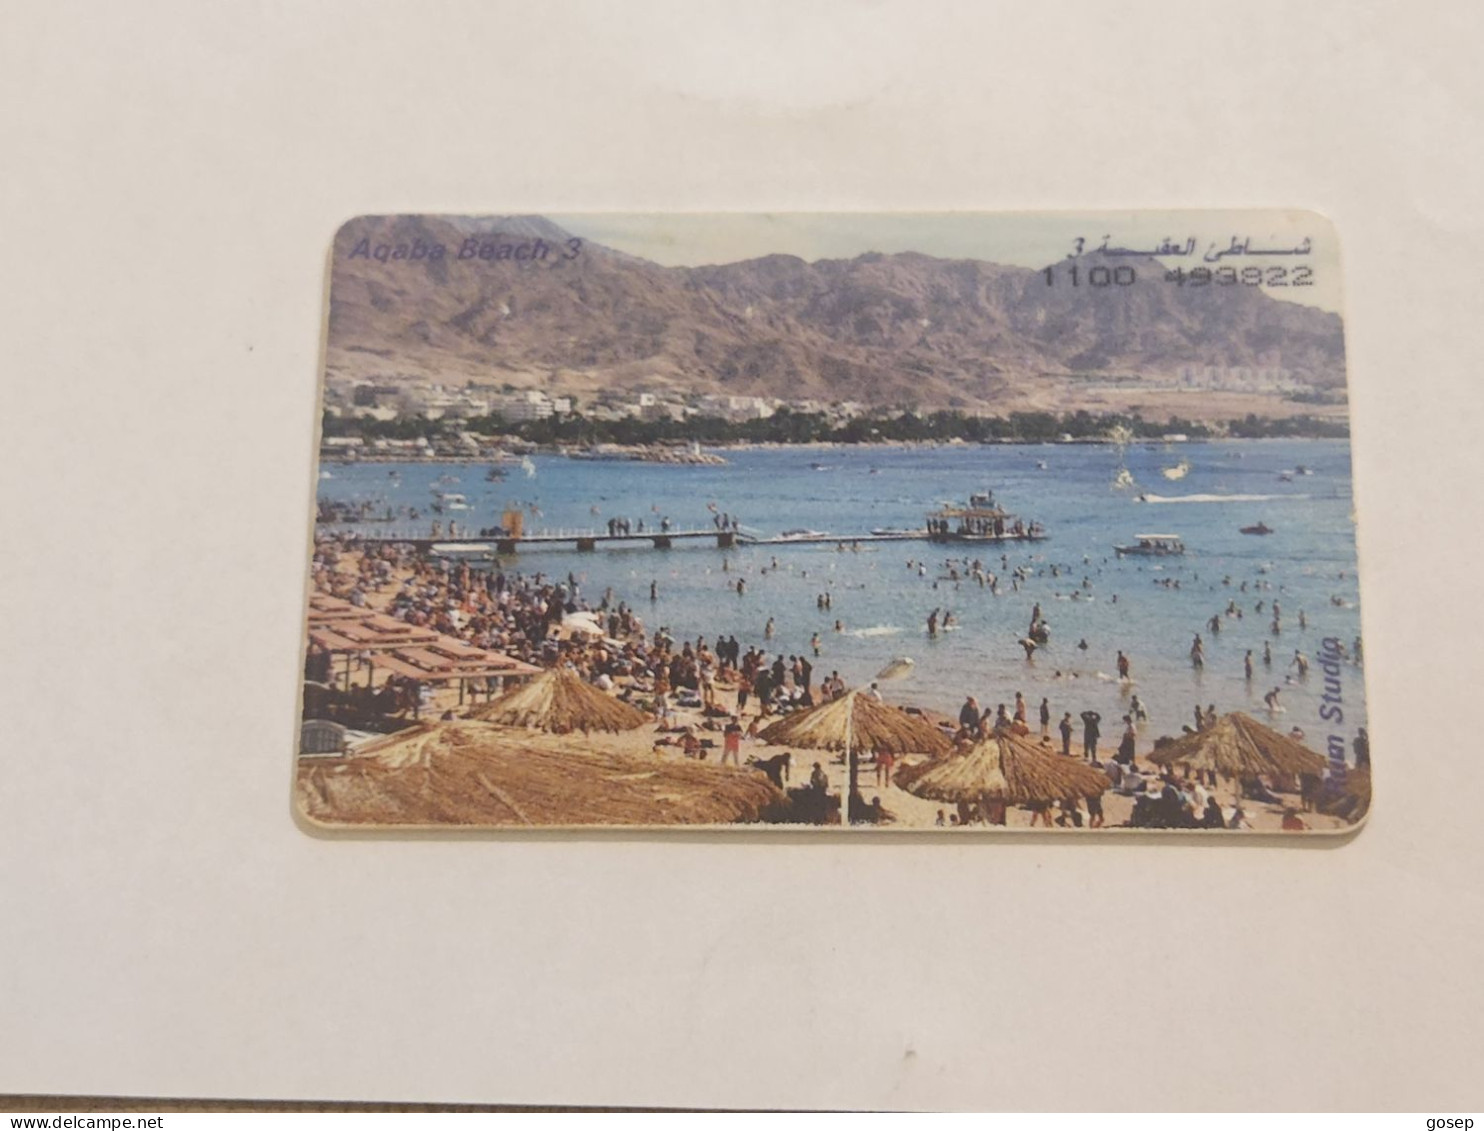 JORDAN-(JO-ALO-0027)-Aqaba Beach-(123)-(1100-493822)-(3JD)-(9/2000)-used Card+1card Prepiad Free - Jordanië